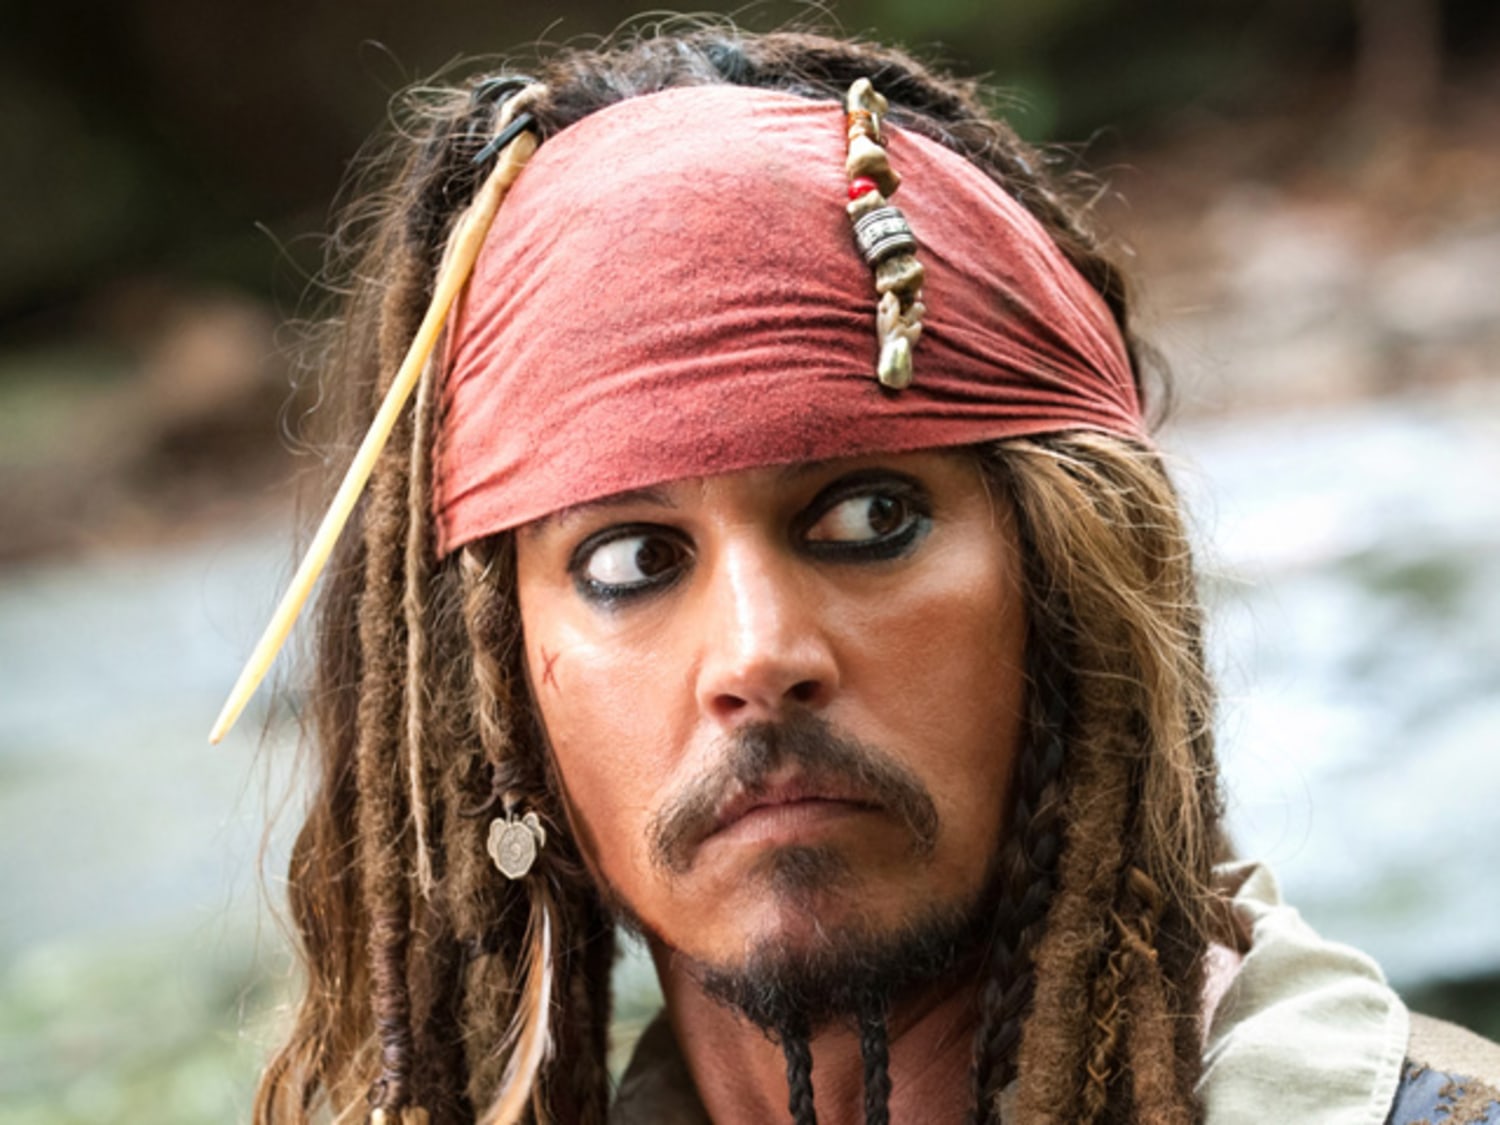 Woman yelling 'I'm Jack Sparrow!' hijacks ferry